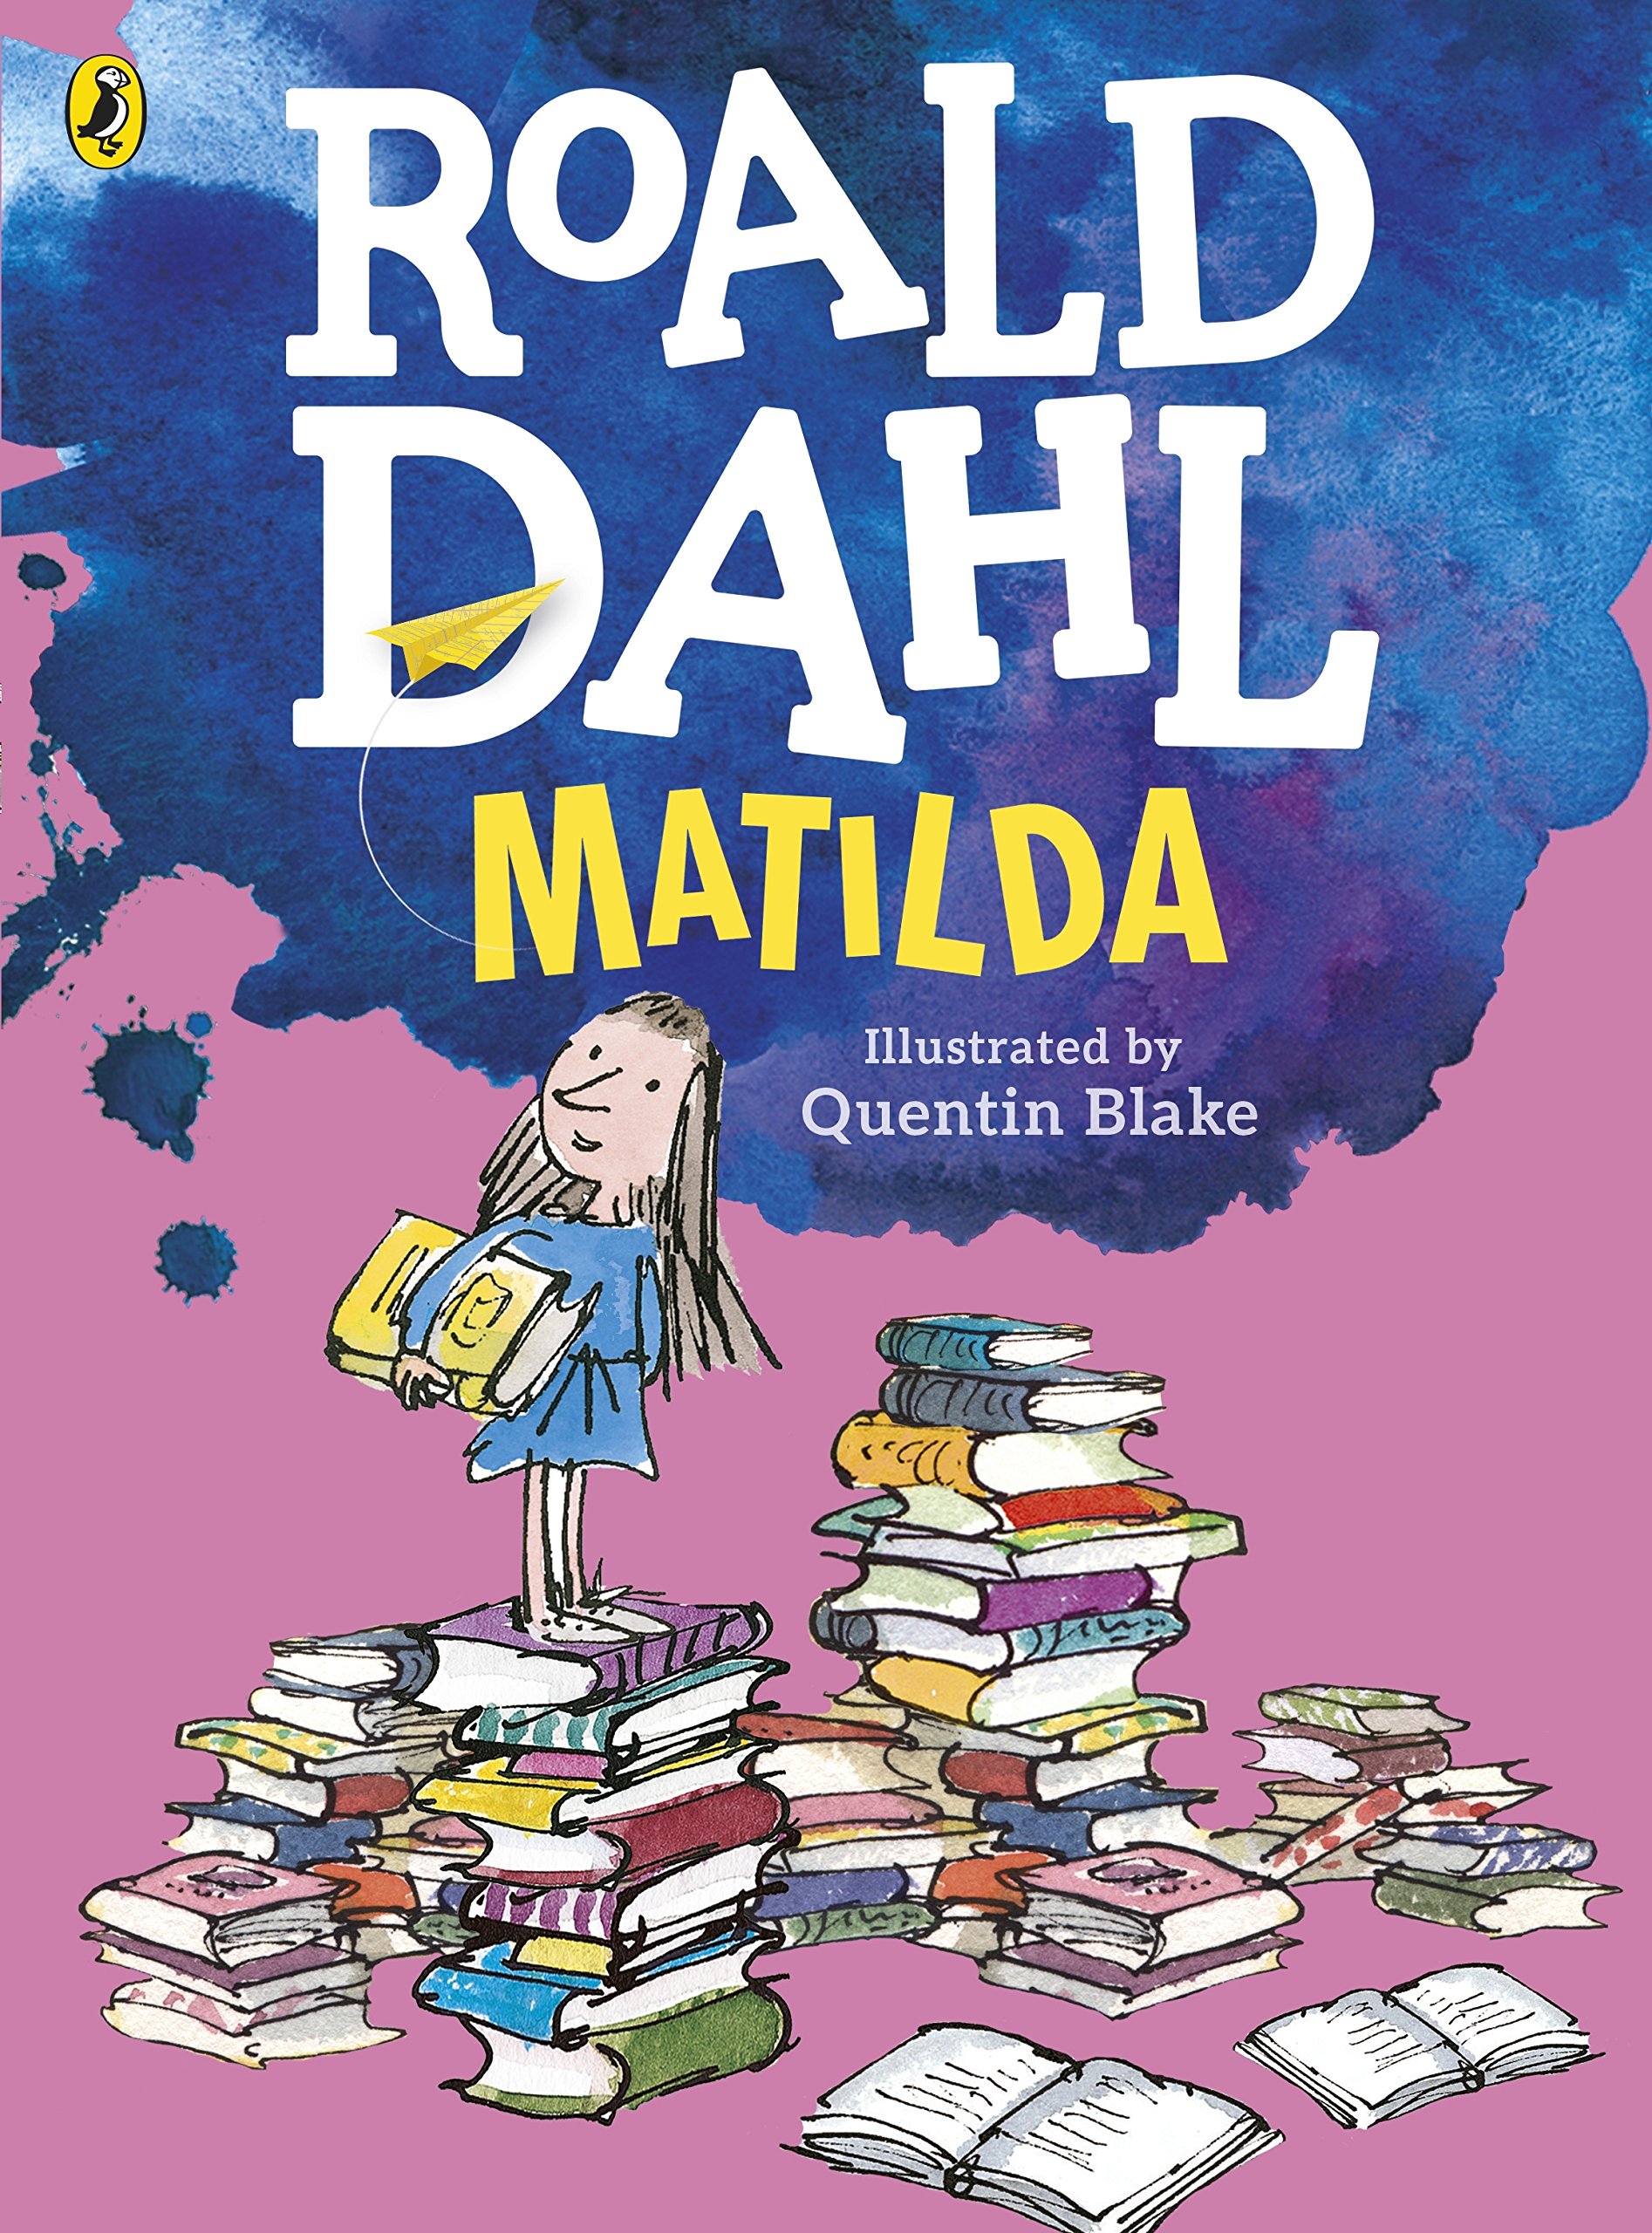 Roald Dahl's Matilda: a perfect read-aloud book for young girls